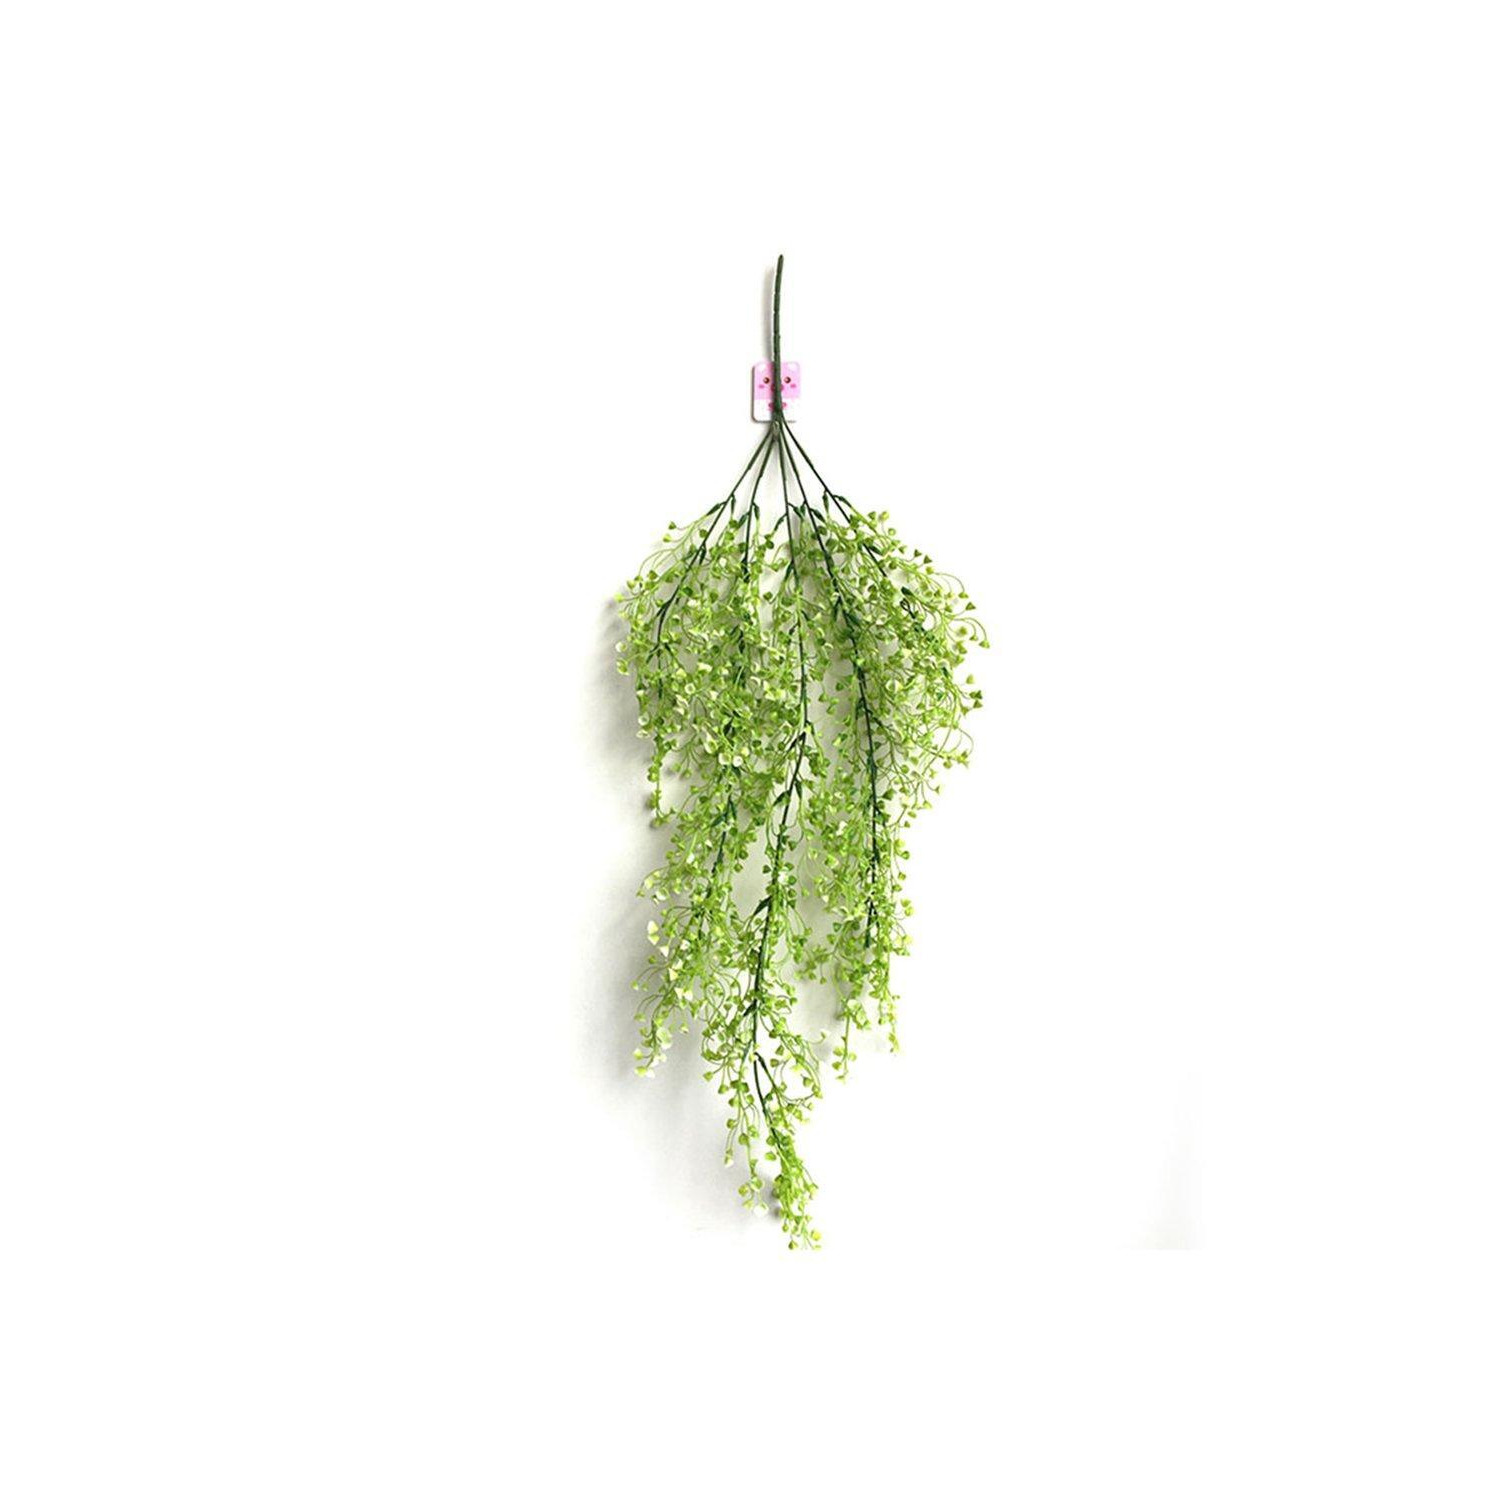 Artificial Hanging Plants Decoration - image 1